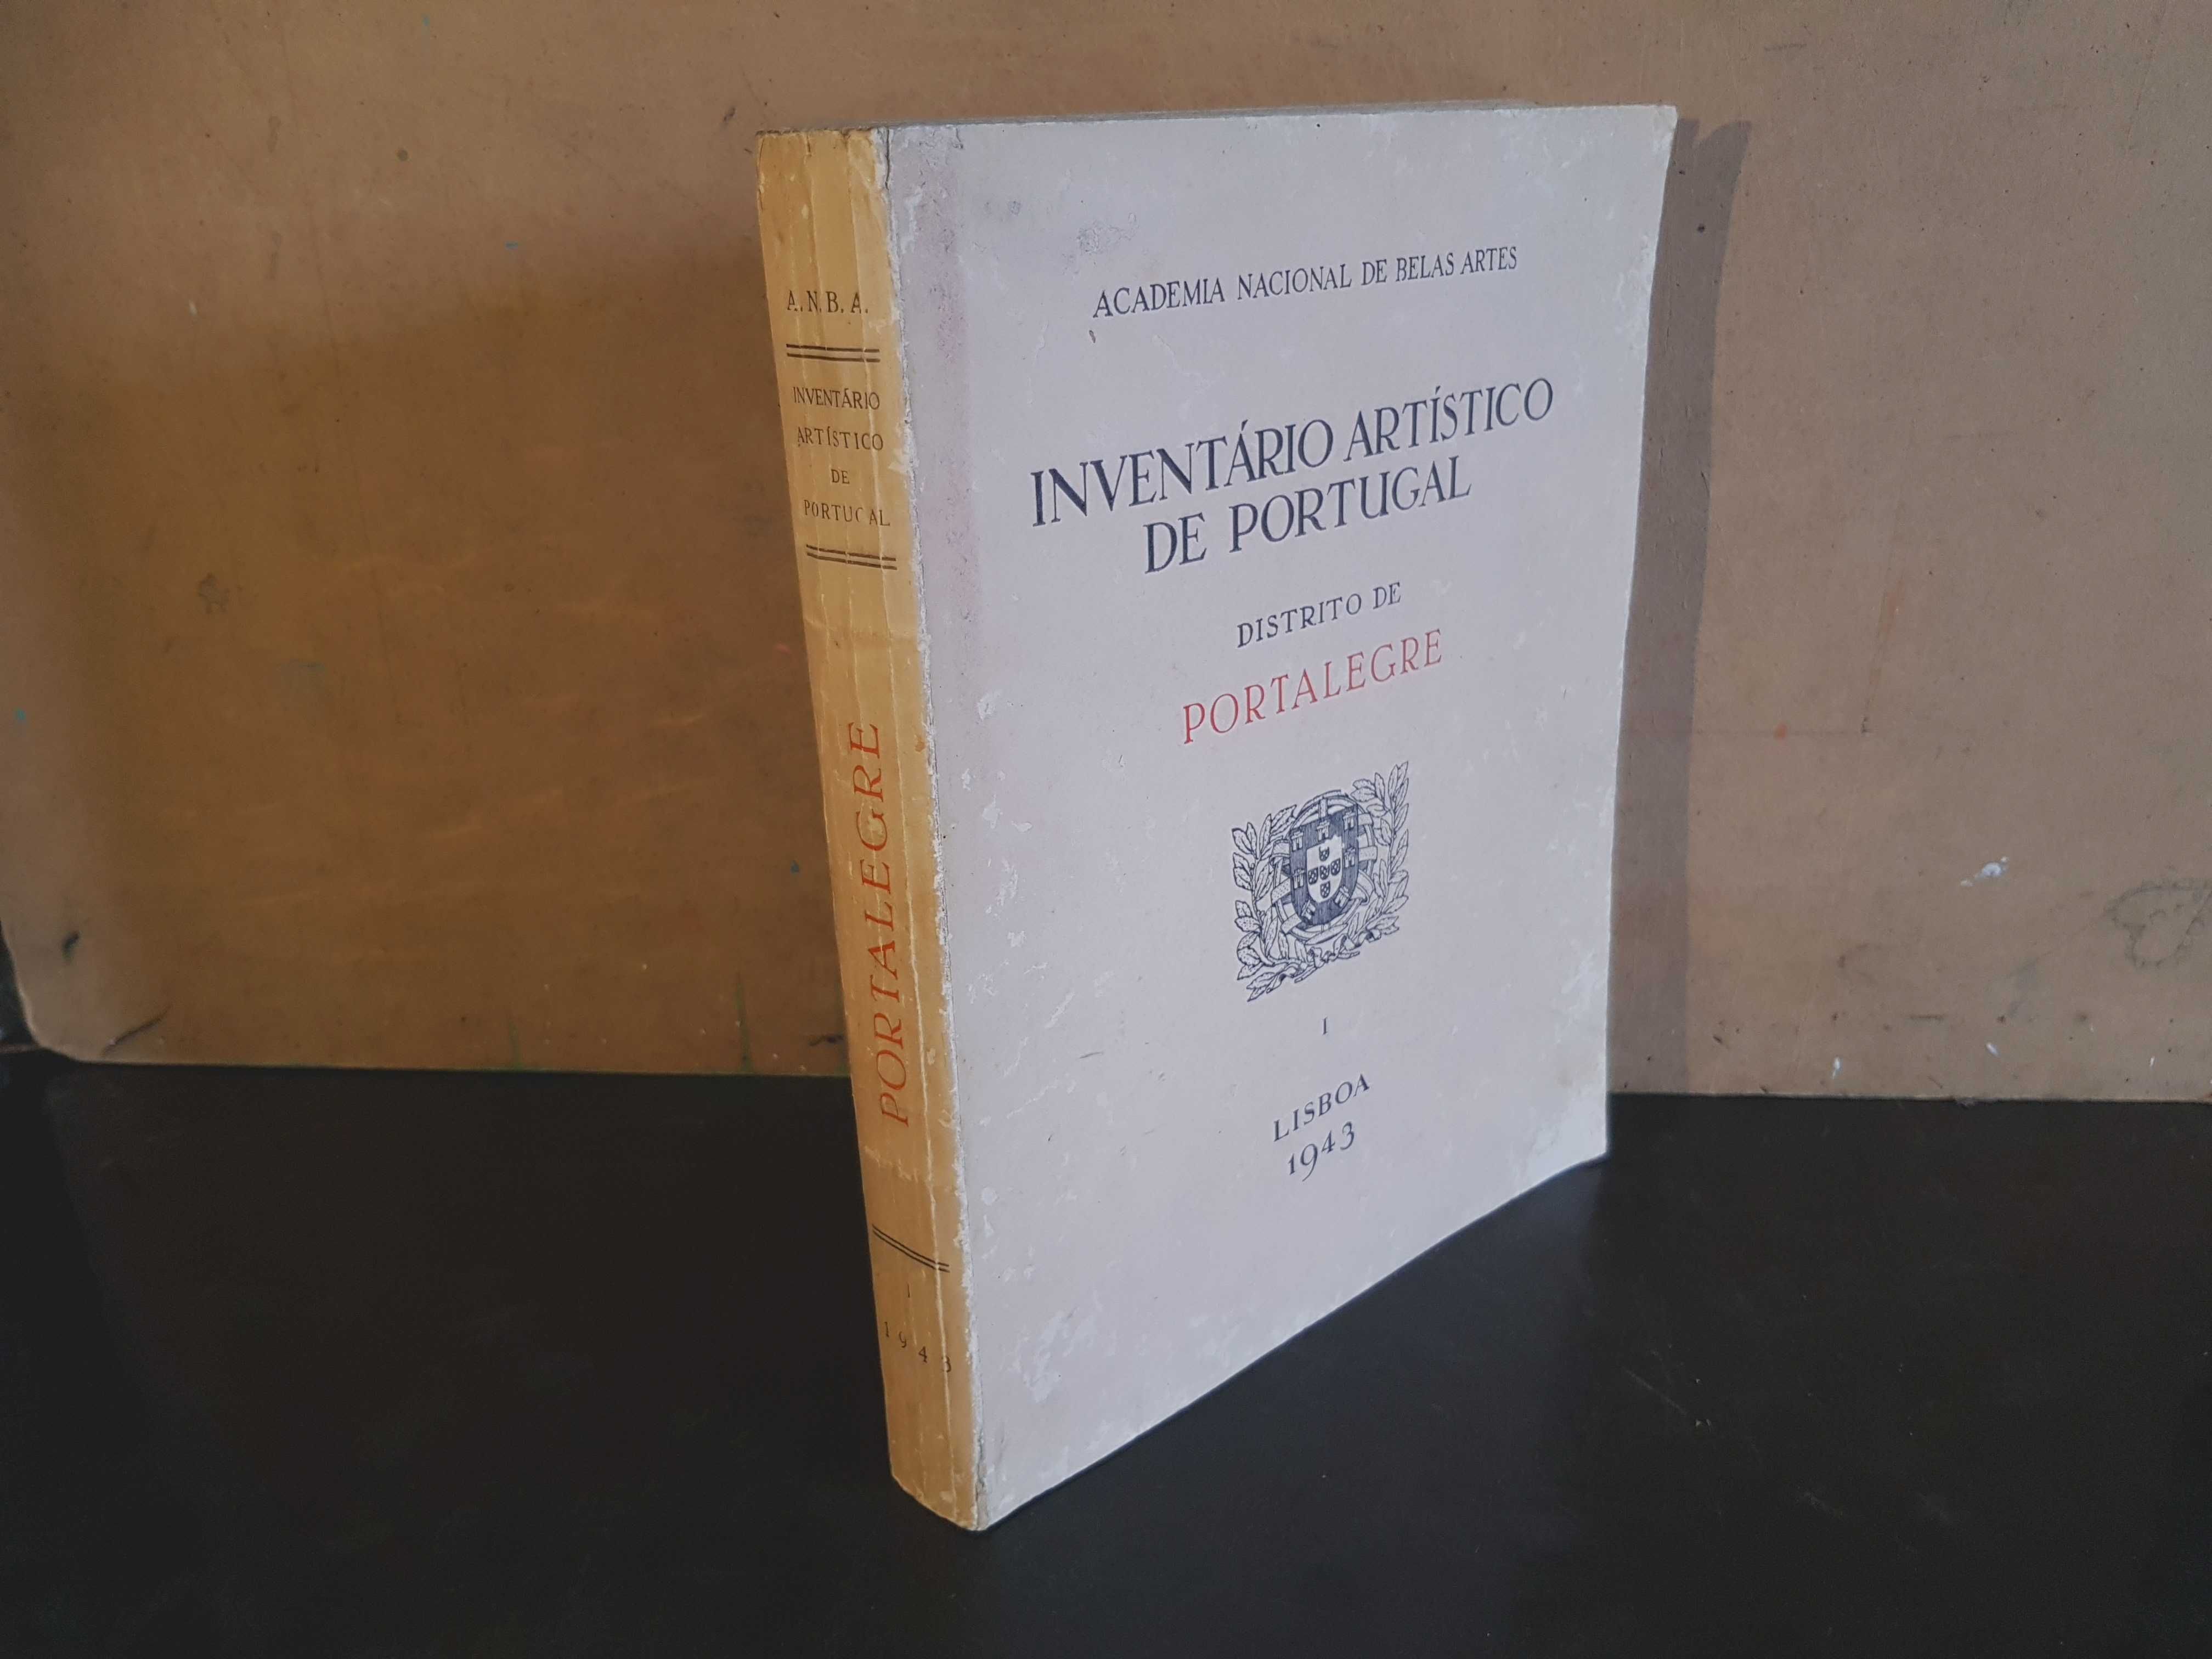 Inventário Artístico de Portugal - Distrito de Portalegre - 1943 I